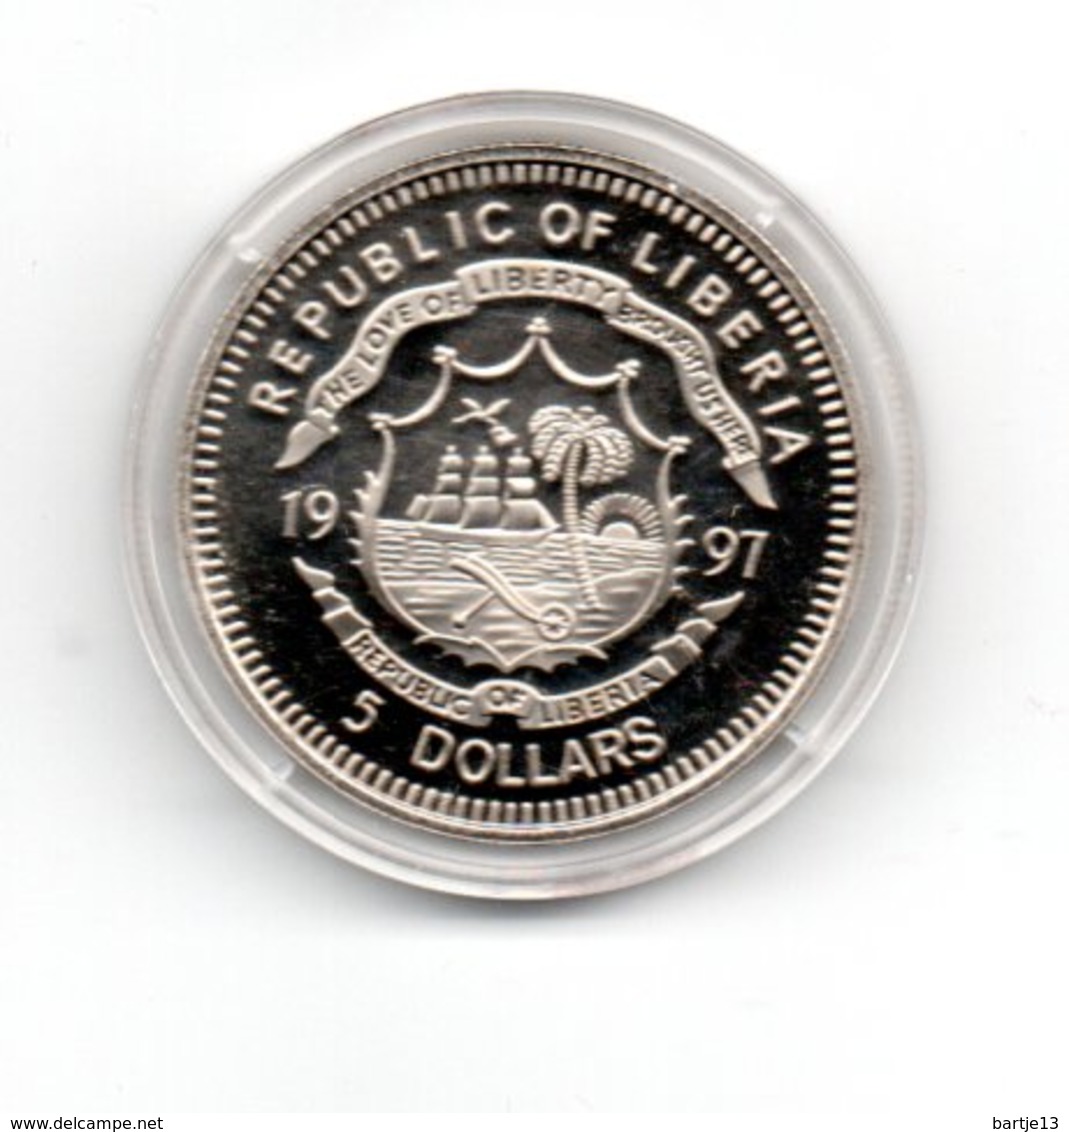 LIBERIA 5 DOLLARS 1997 CN DIANA 1961-1997 DAMAGE ONLY ON CAPSEL - Liberia